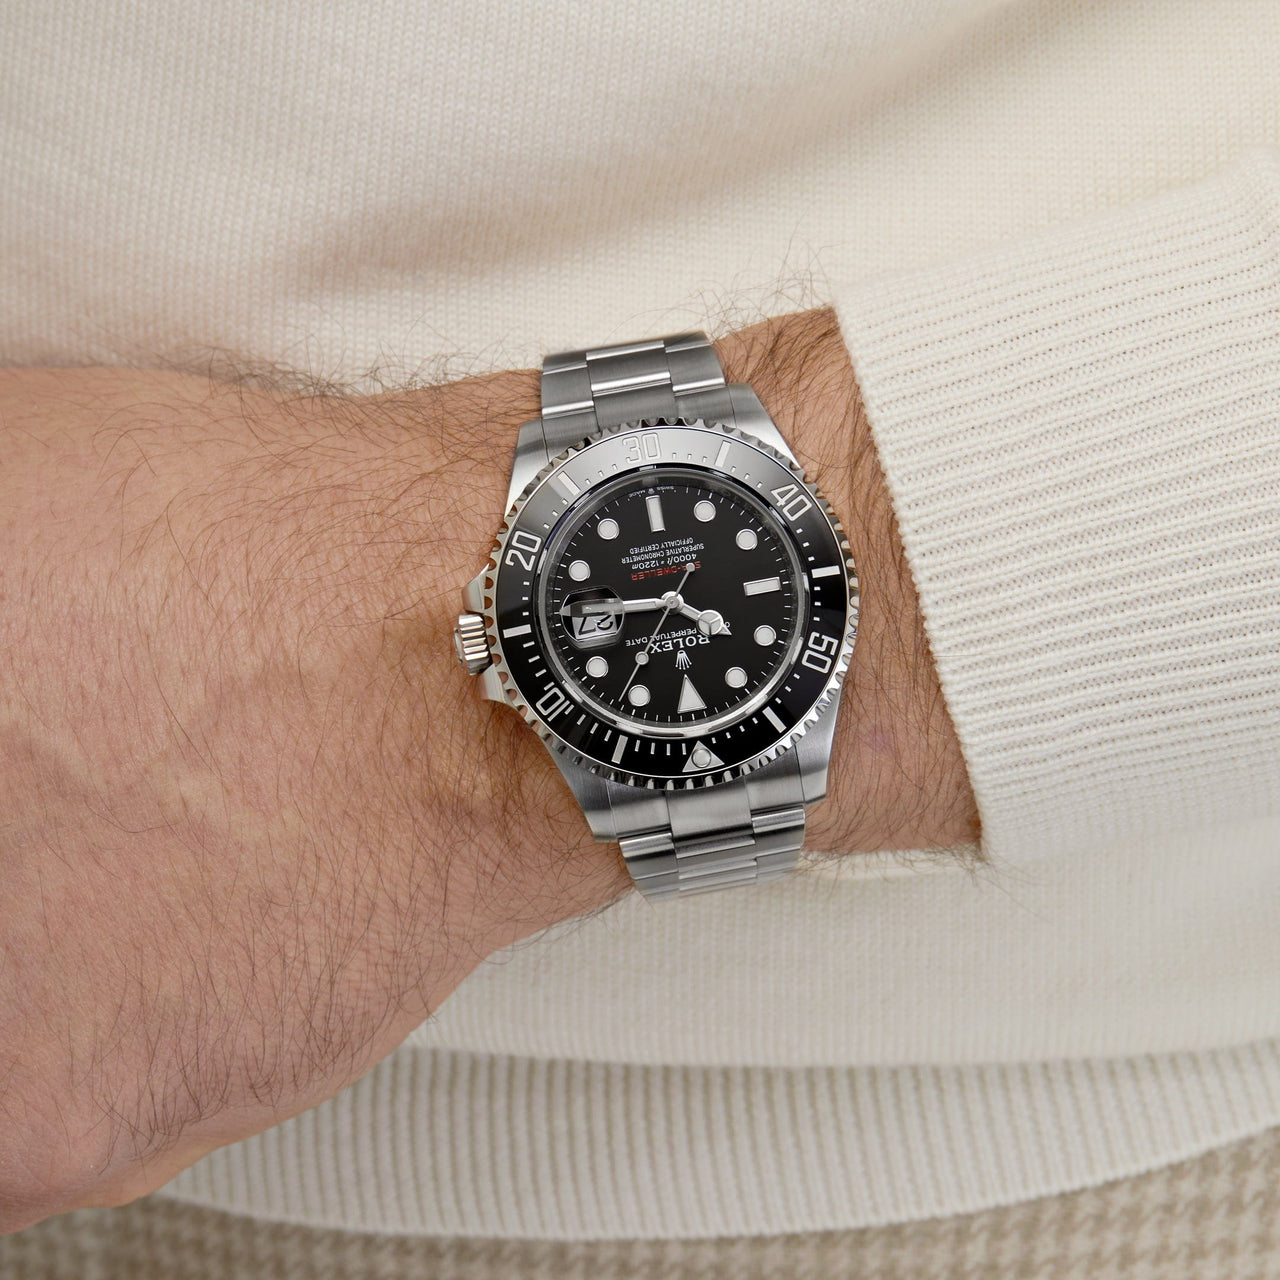 Luxury Watch Rolex Sea Dweller 126600 43mm Stainless Steel Black Dial Wrist Aficionado